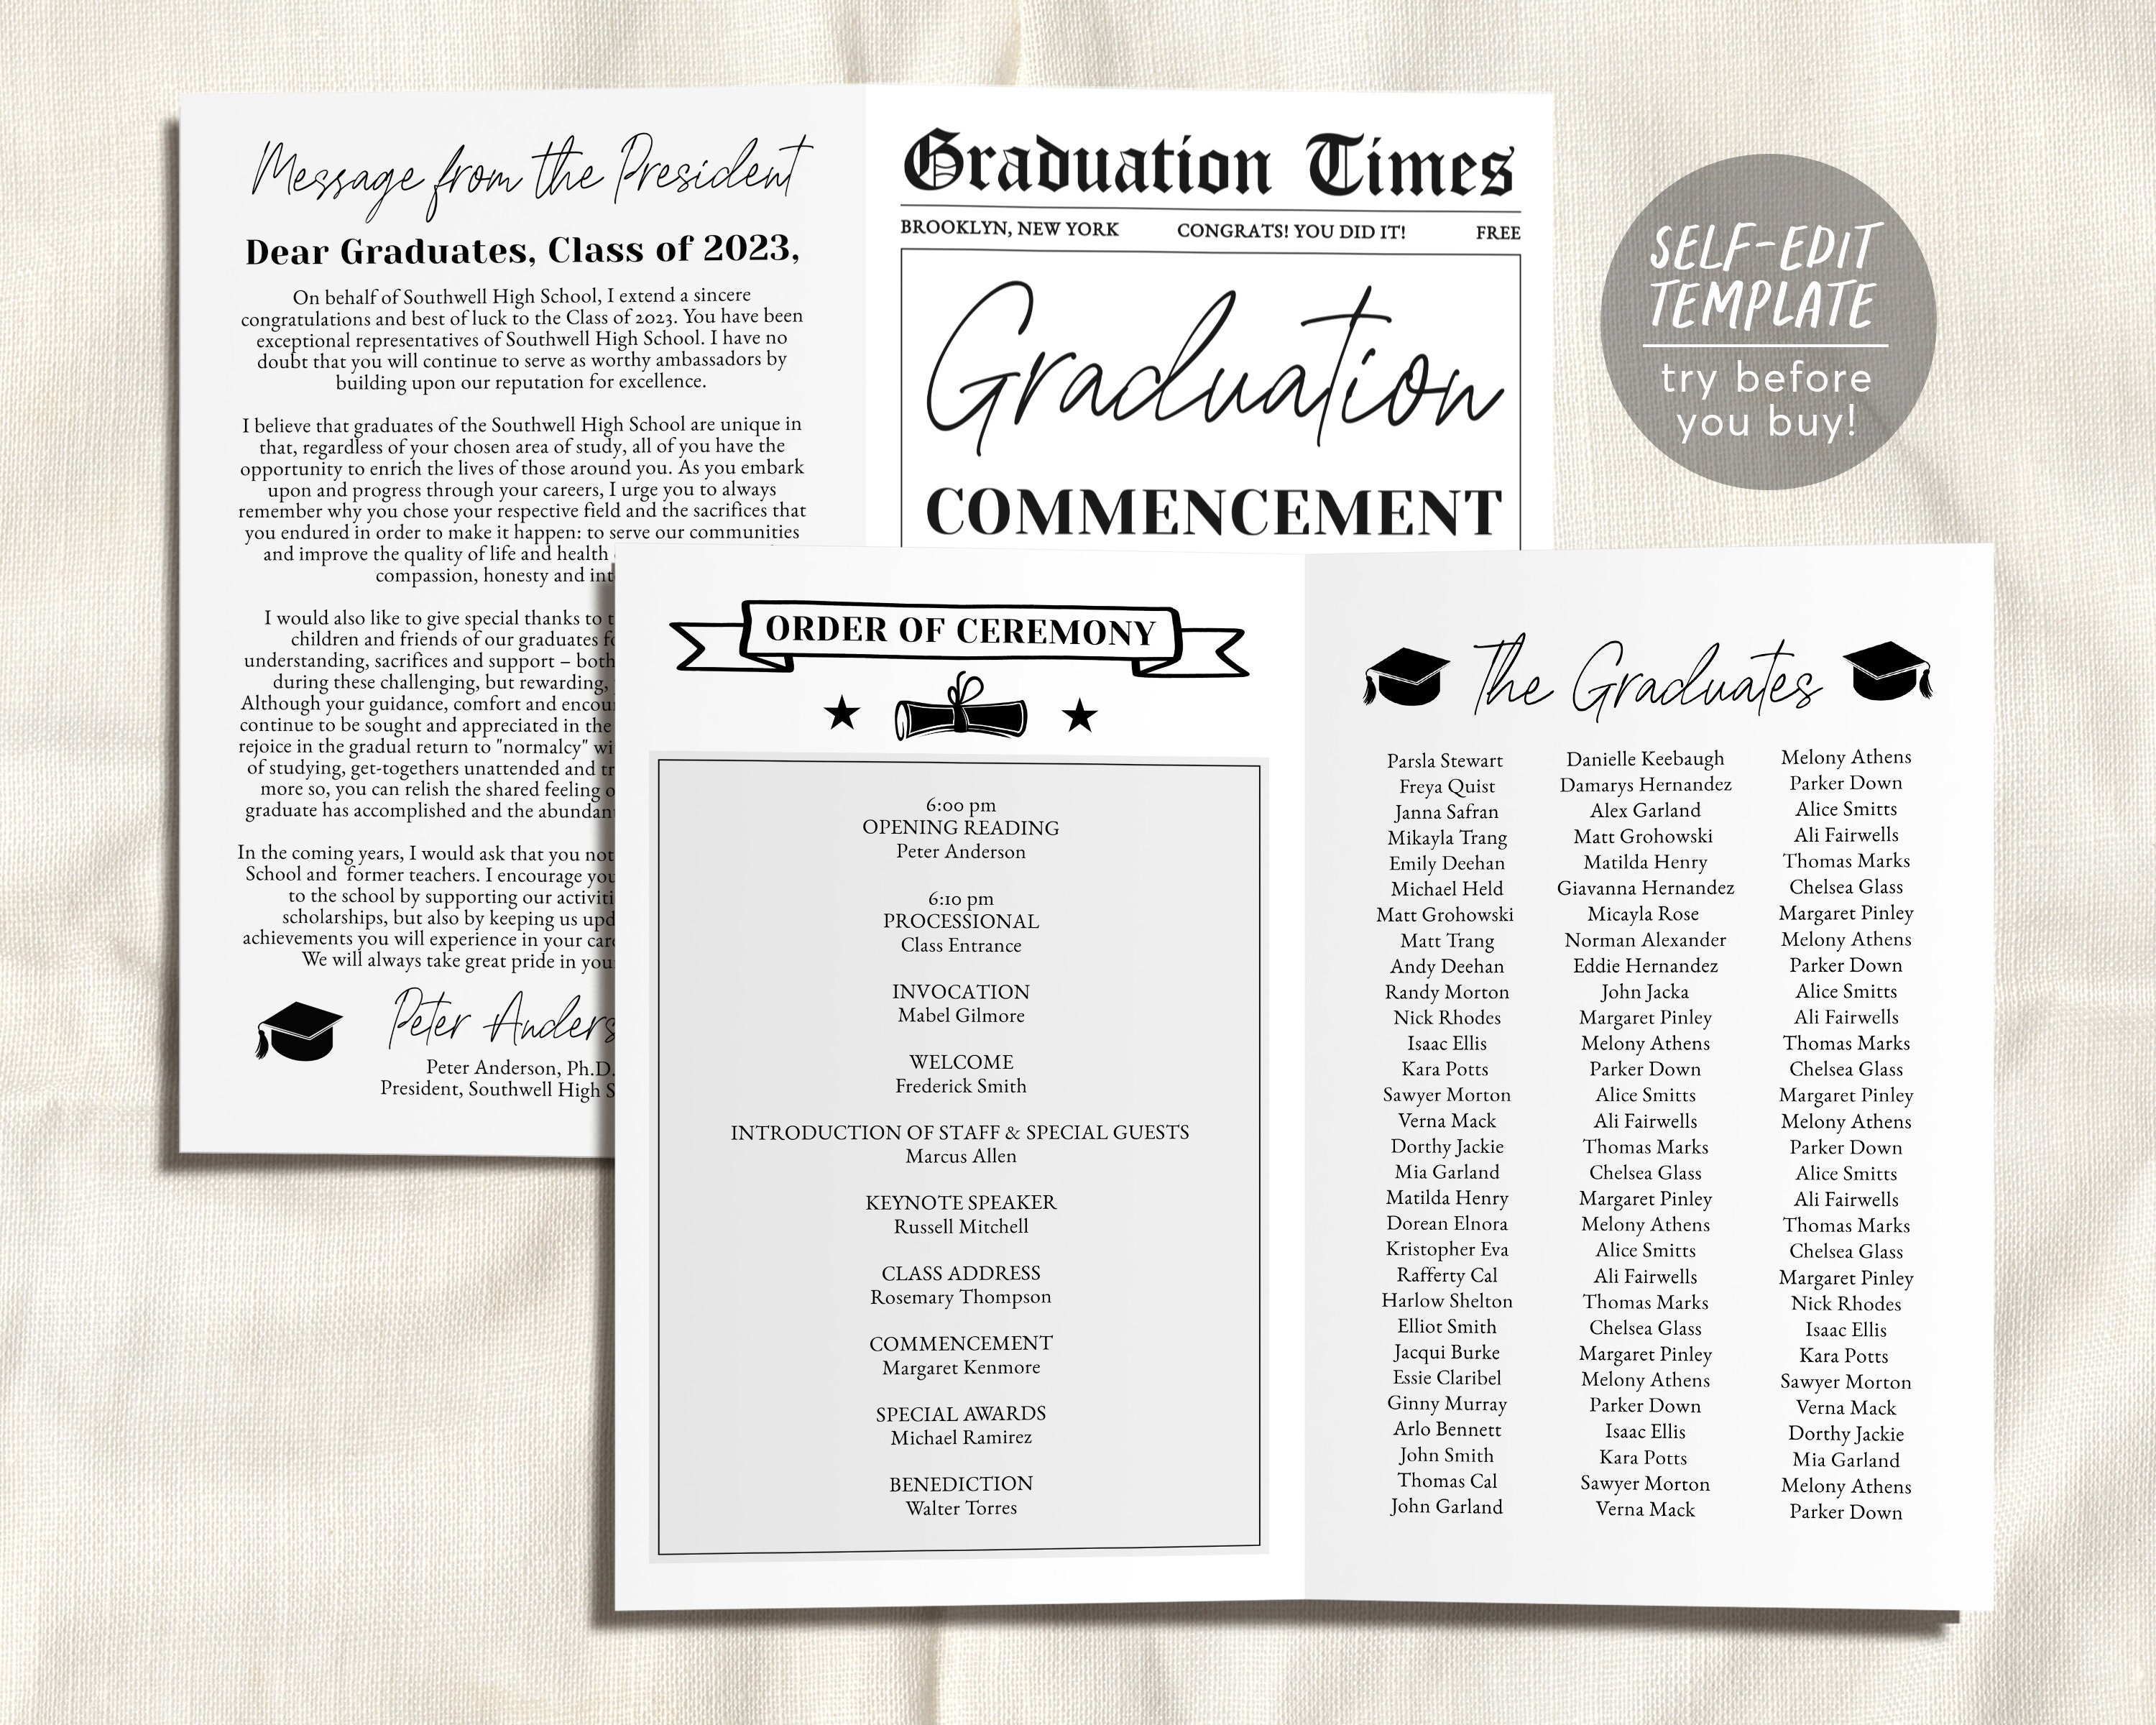 Graduation Commencements / Class of 2024